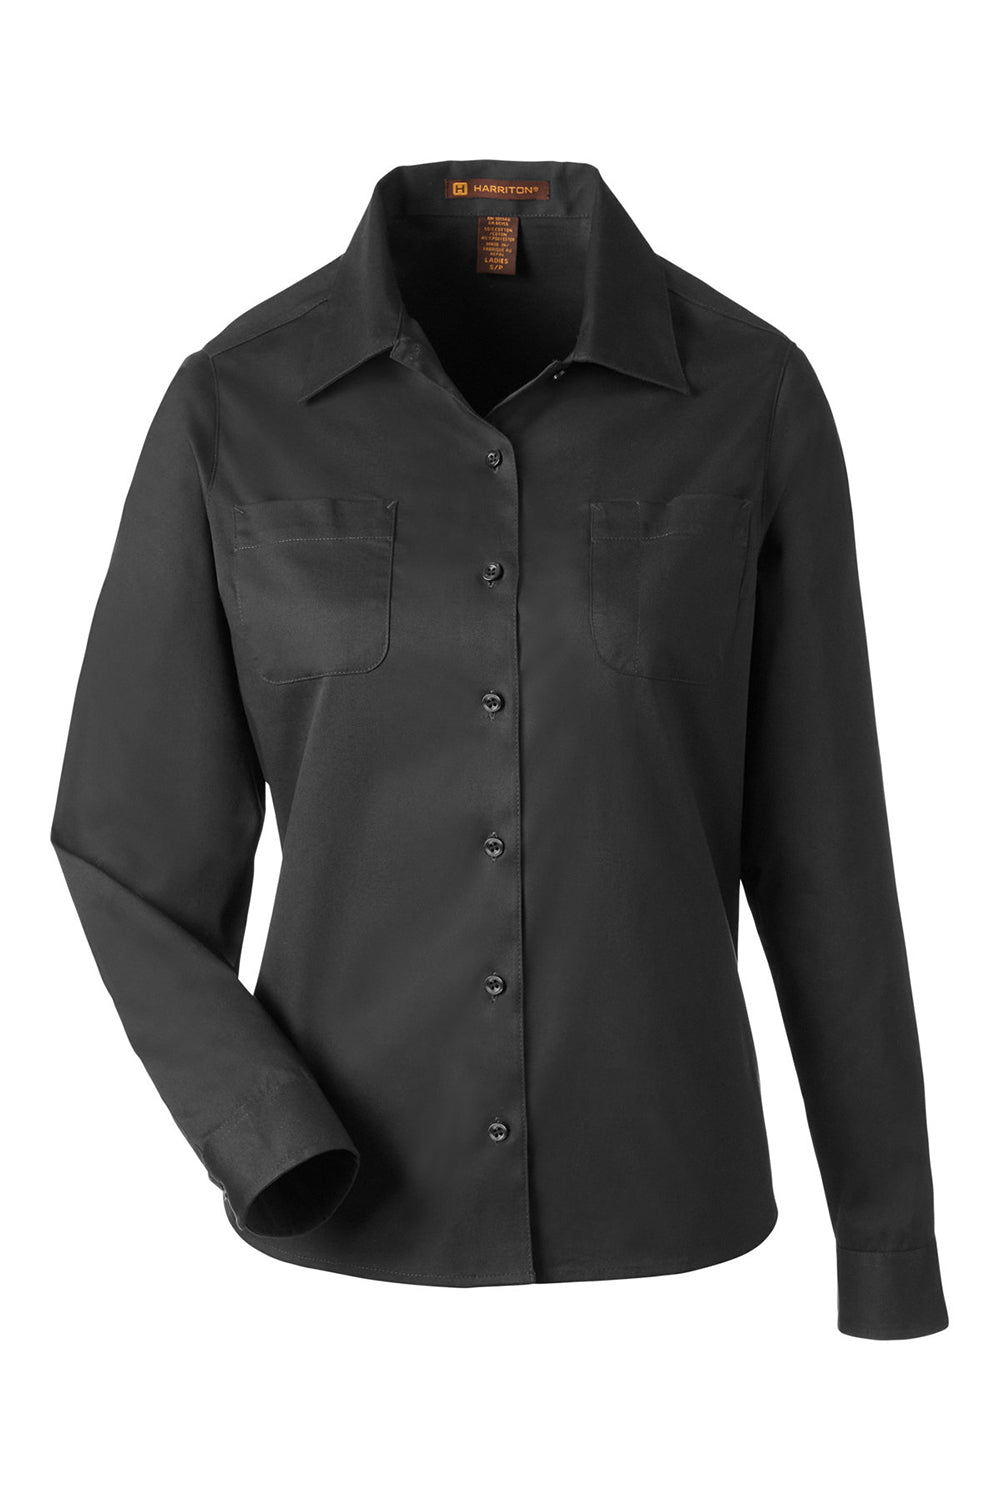 Harriton M585LW Womens Advantage Long Sleeve Button Down Shirt w/ Double Pockets Dark Charcoal Grey Flat Front